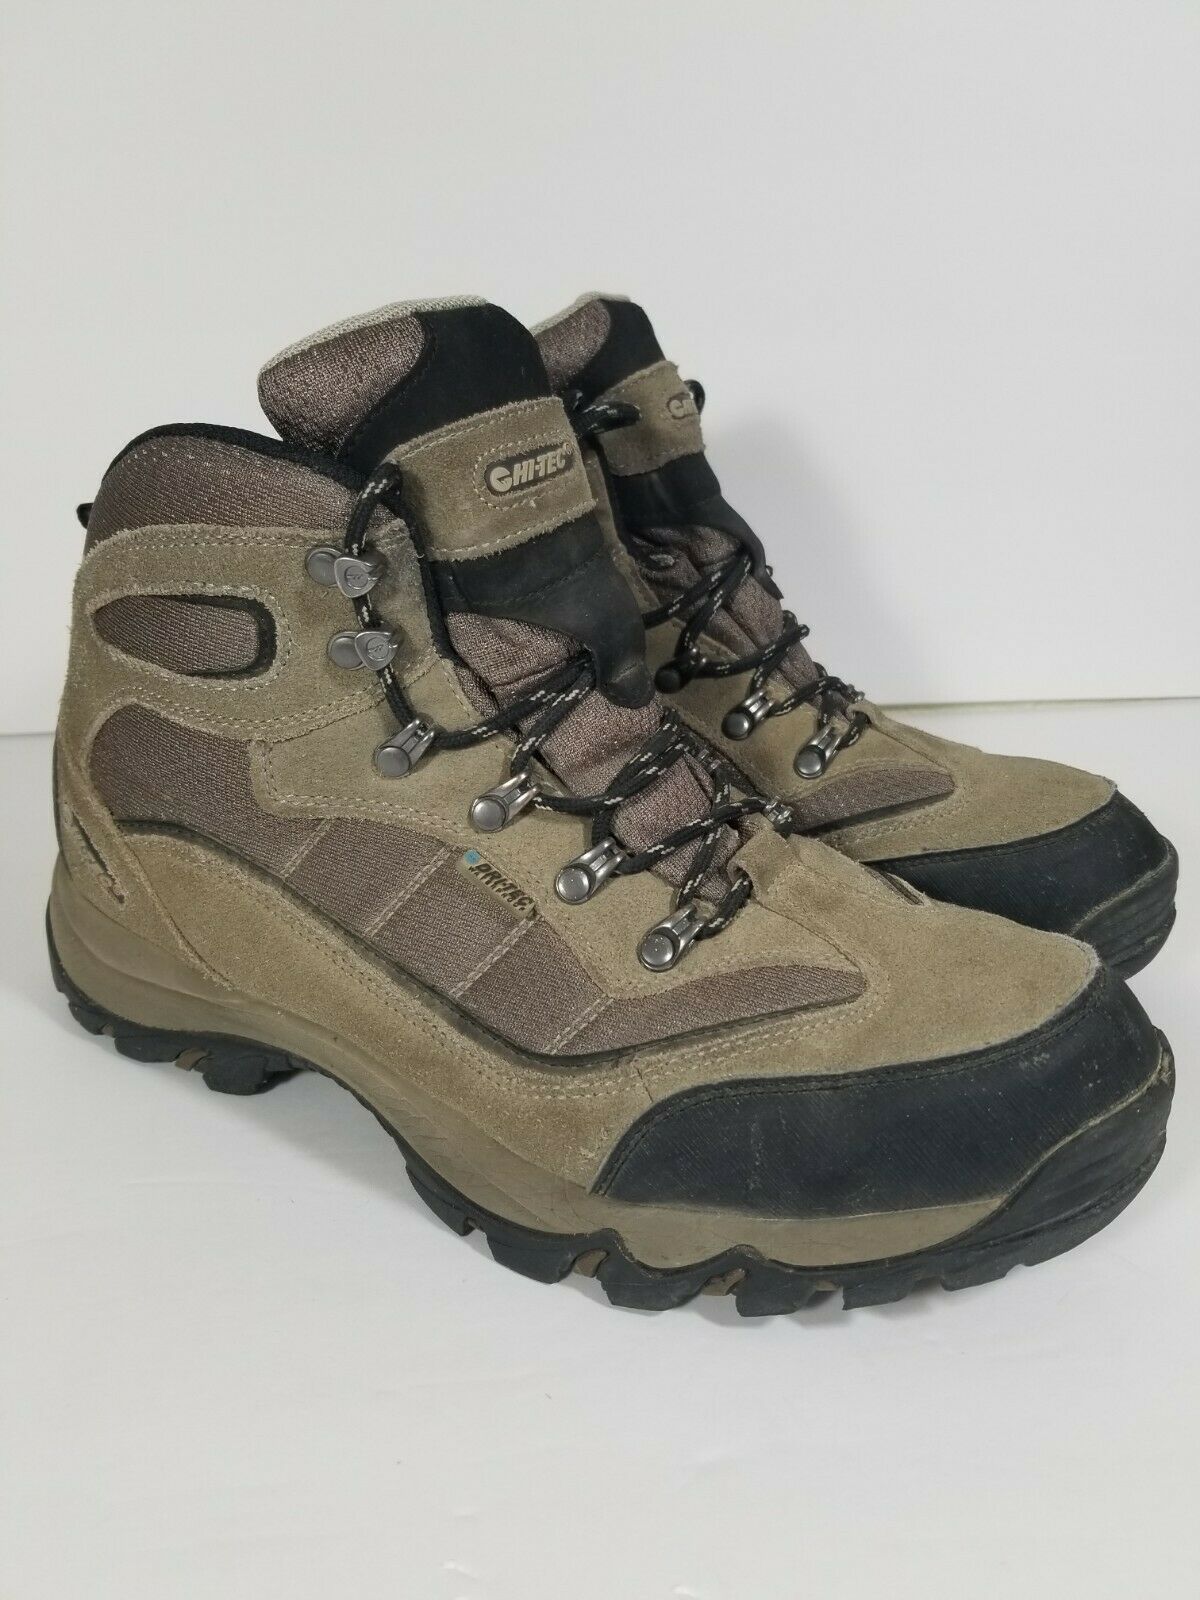 Hi-Tec Skamania Men's Size 11 M Waterproof Suede Leather Hiking Boots